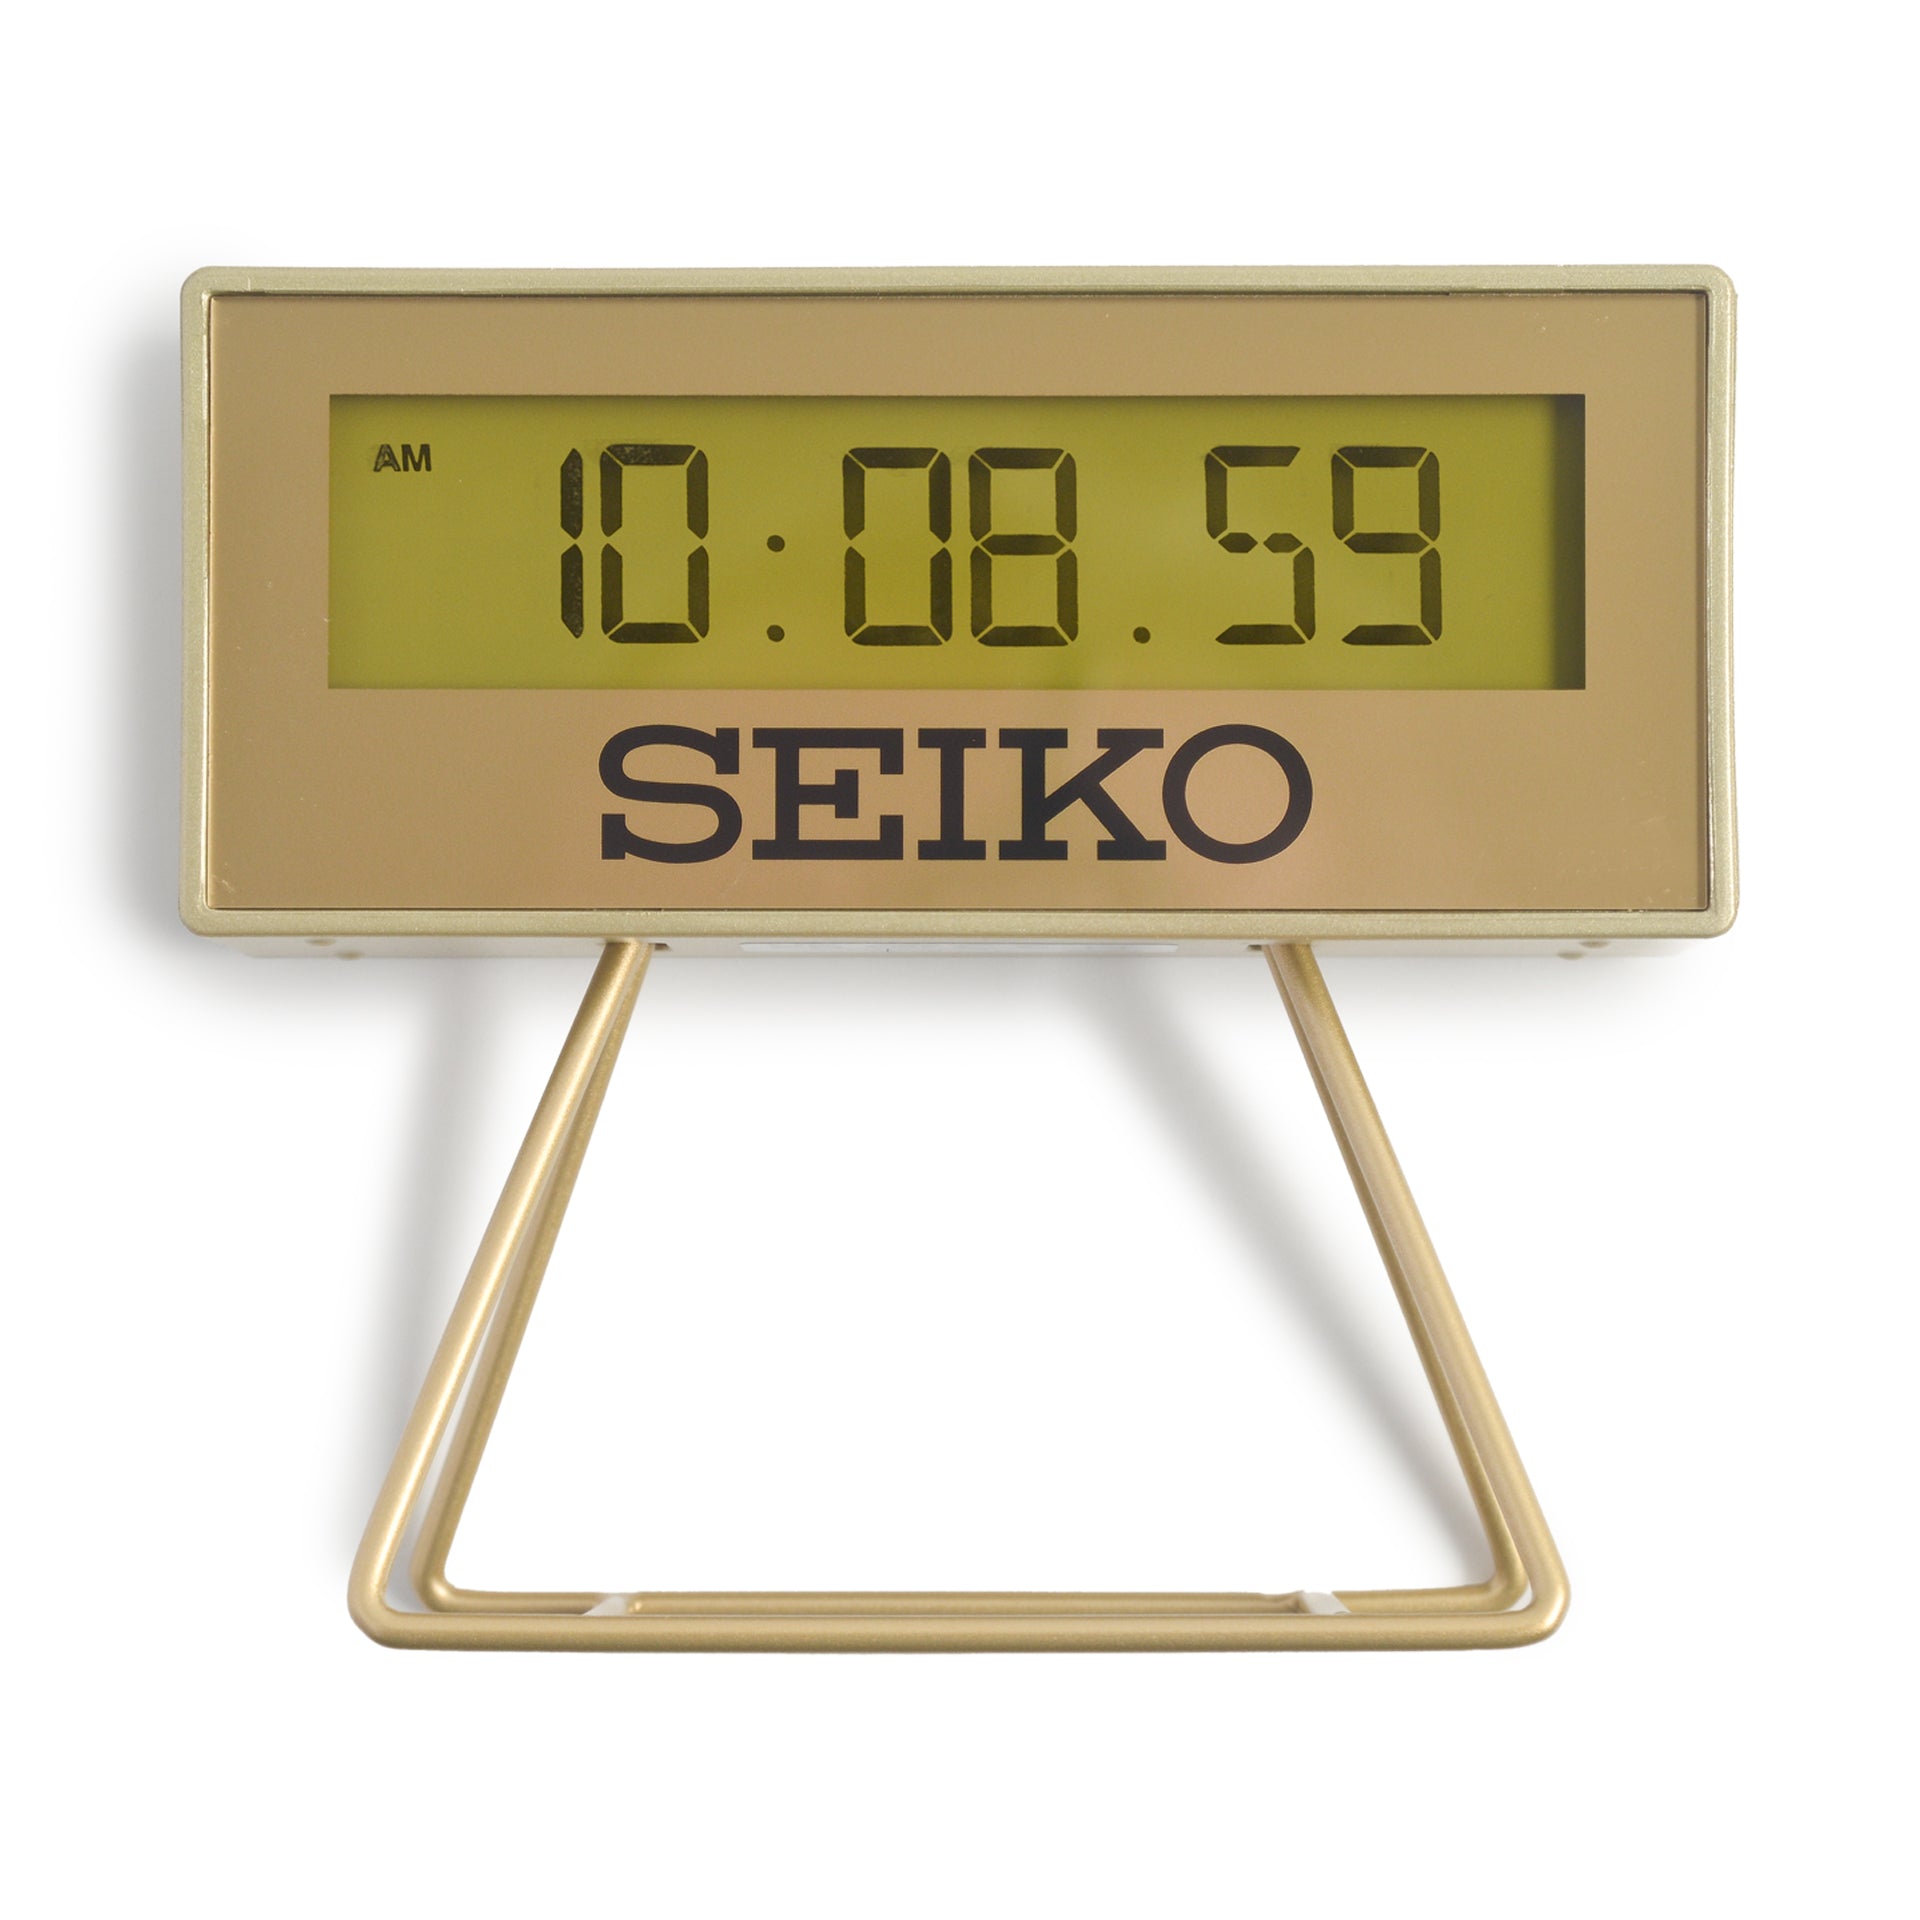 Seiko Victory Limited Edition Alarm Clock, #Seiko #Victory #Limited #Edition #Alarm #Clock